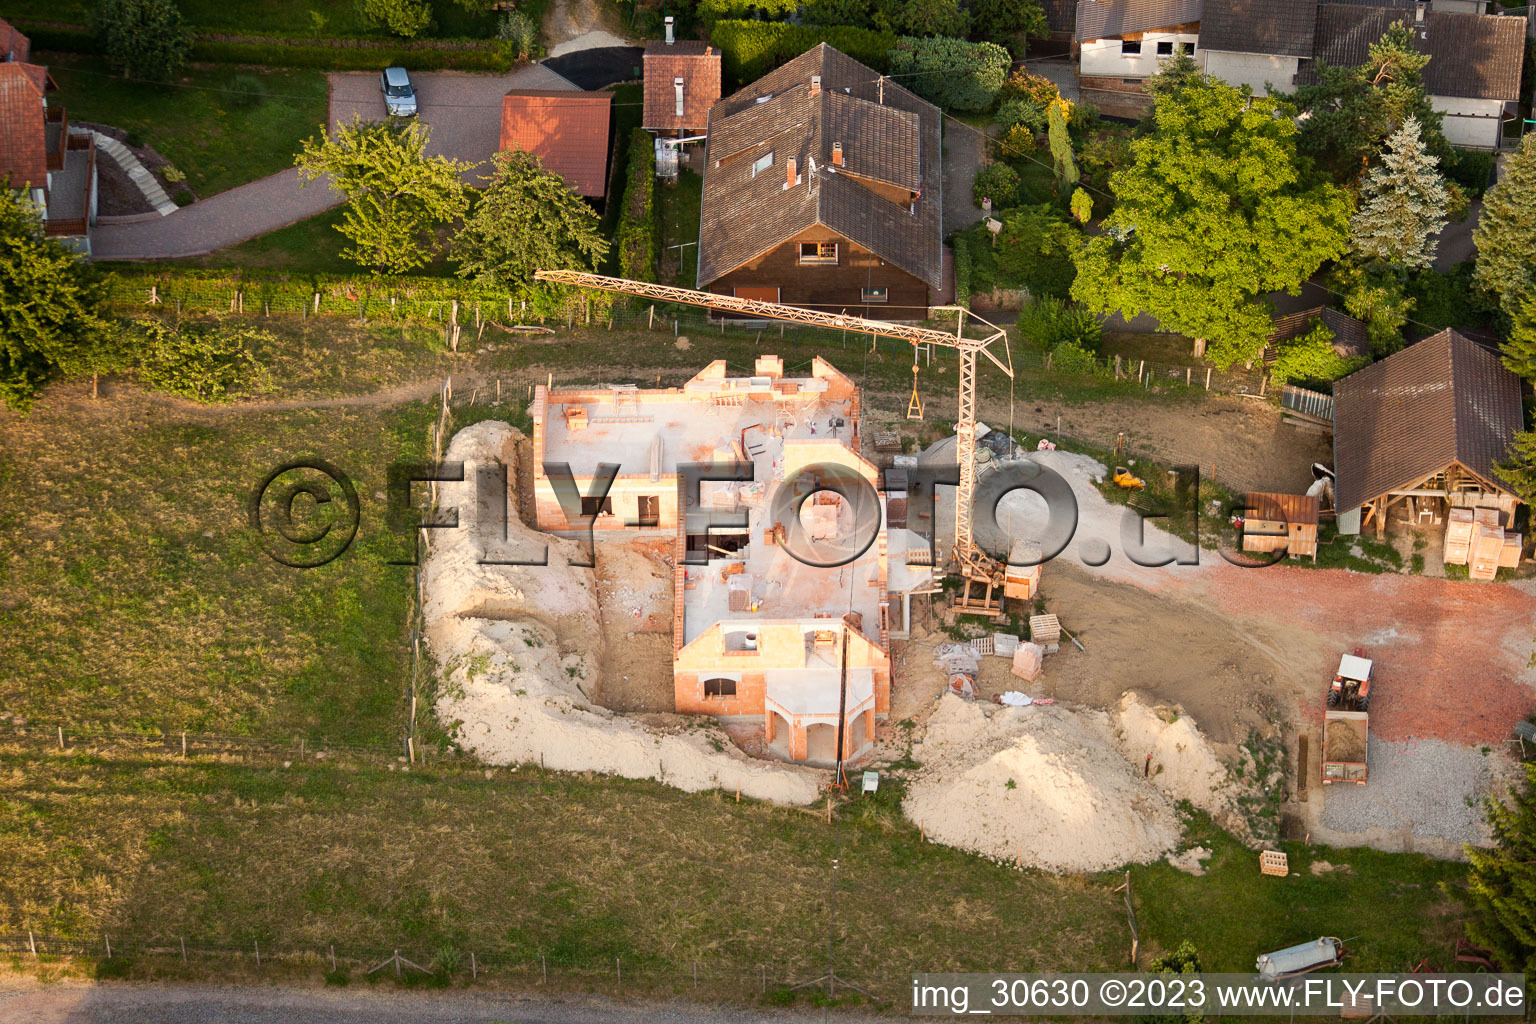 Wintzenbach in the state Bas-Rhin, France seen from a drone